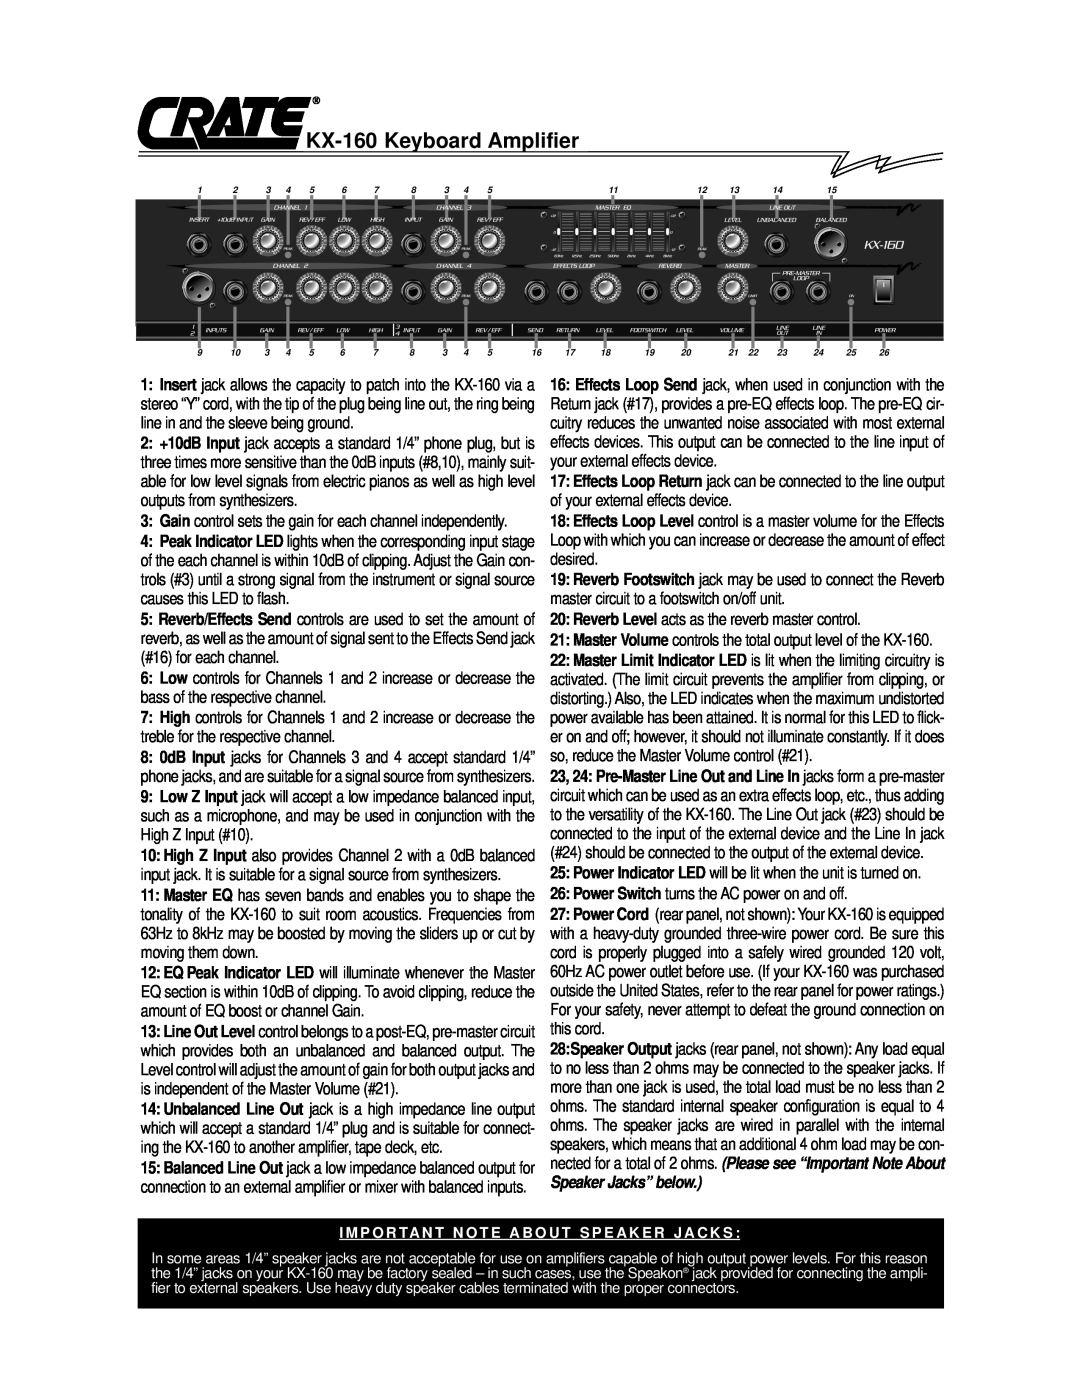 Crate Amplifiers owner manual KX-160 Keyboard Amplifier, Speaker Jacks” below 